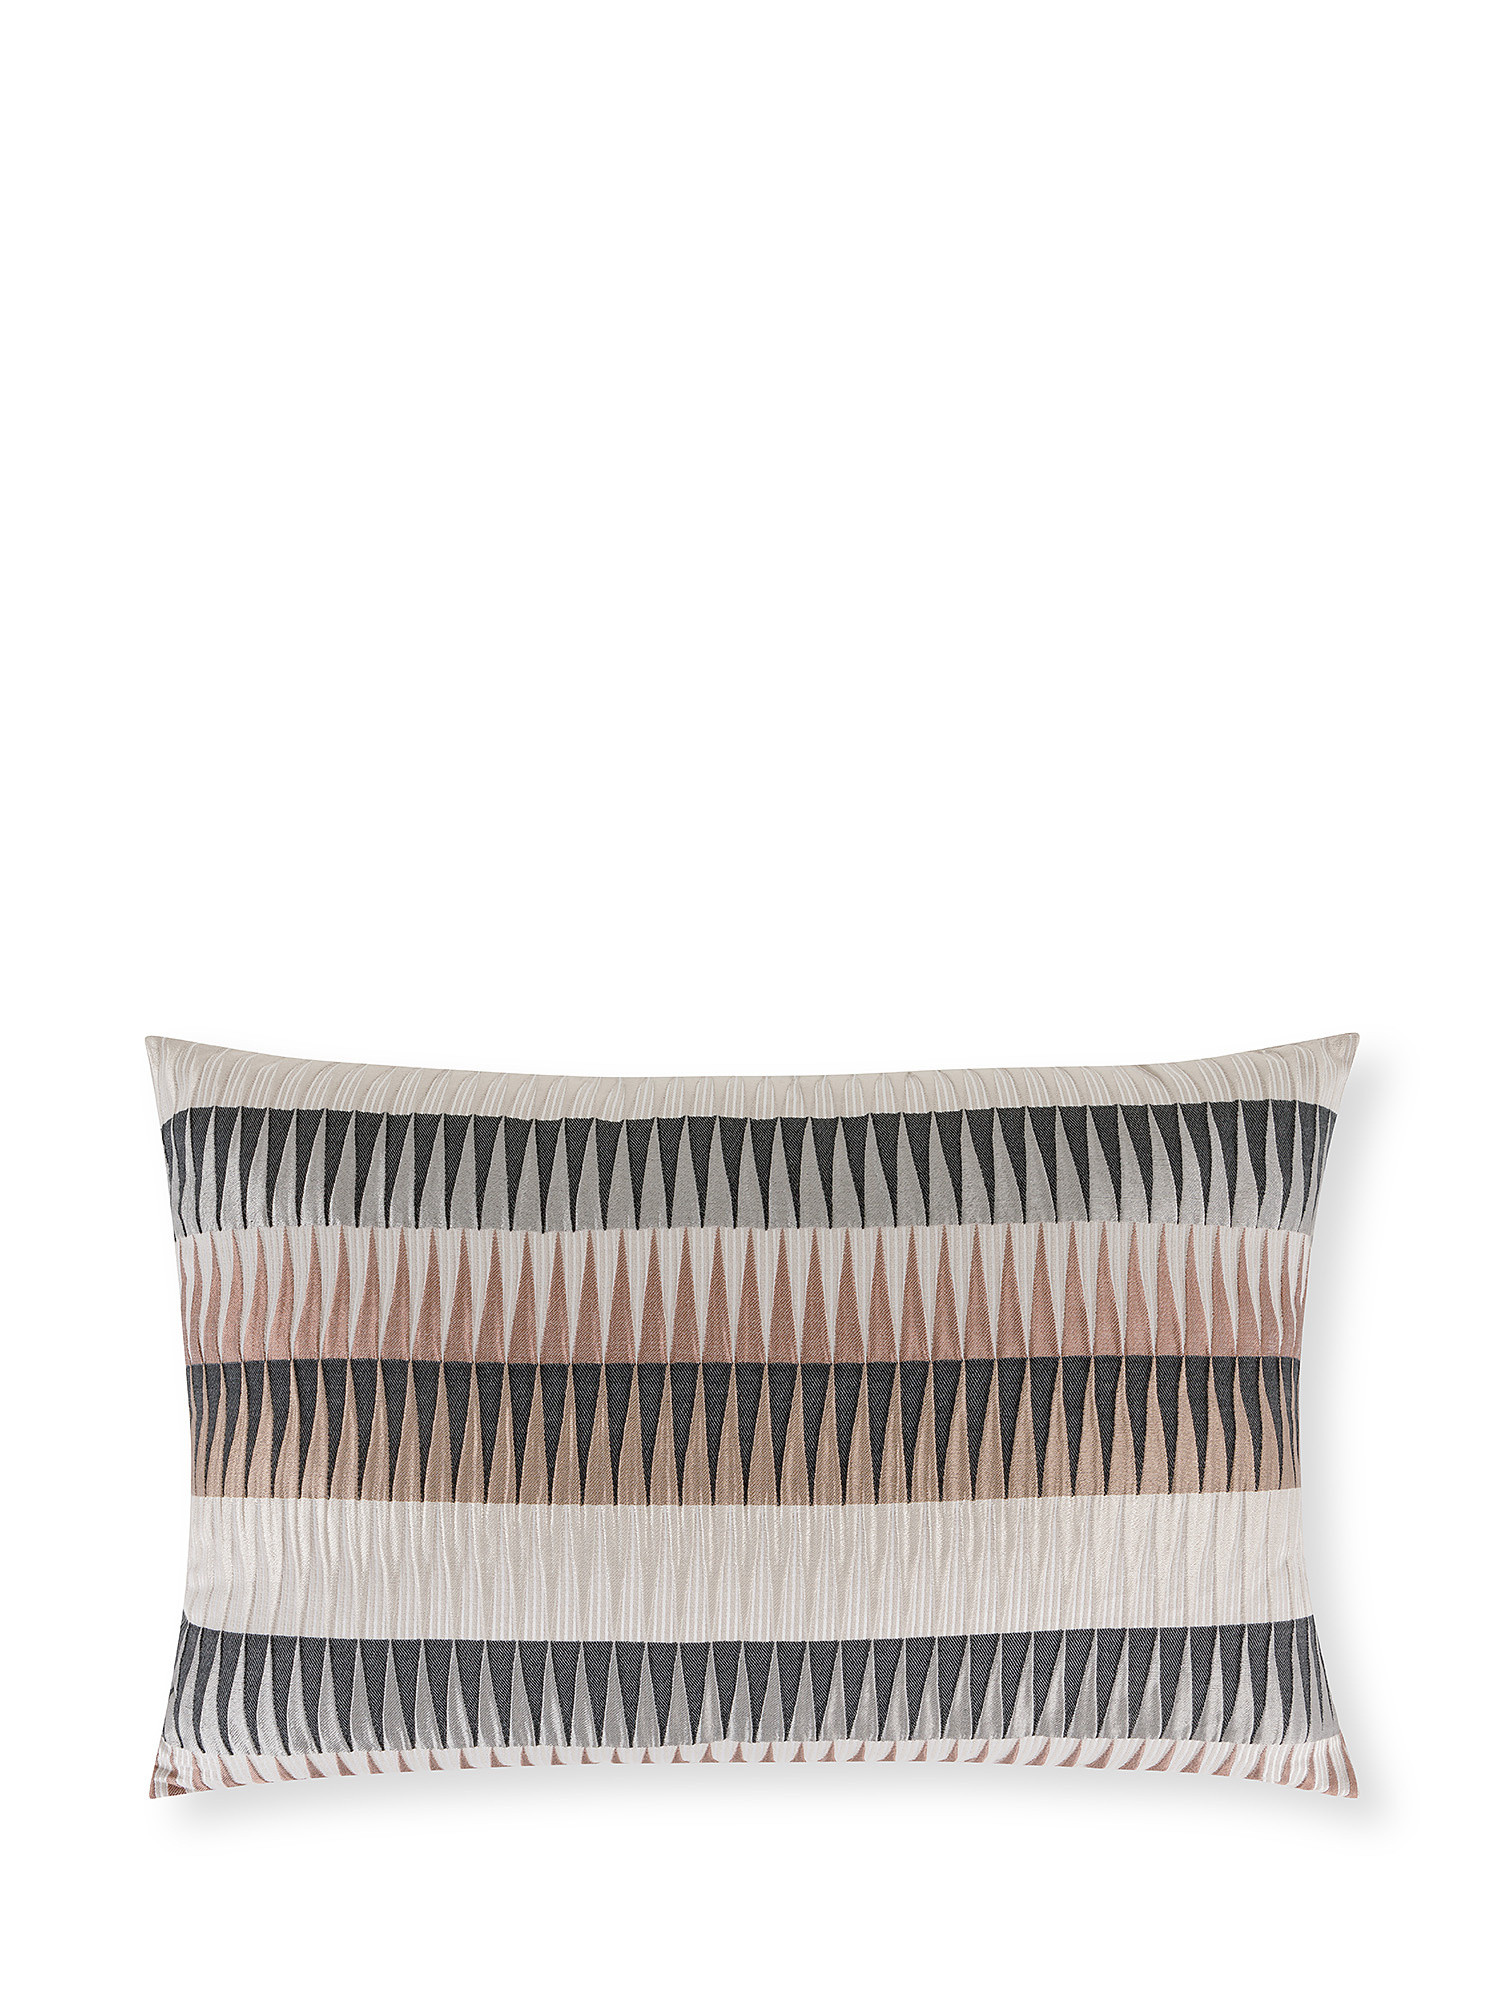 Jacquard cushion with geometric pattern 35x55cm, Beige, large image number 0